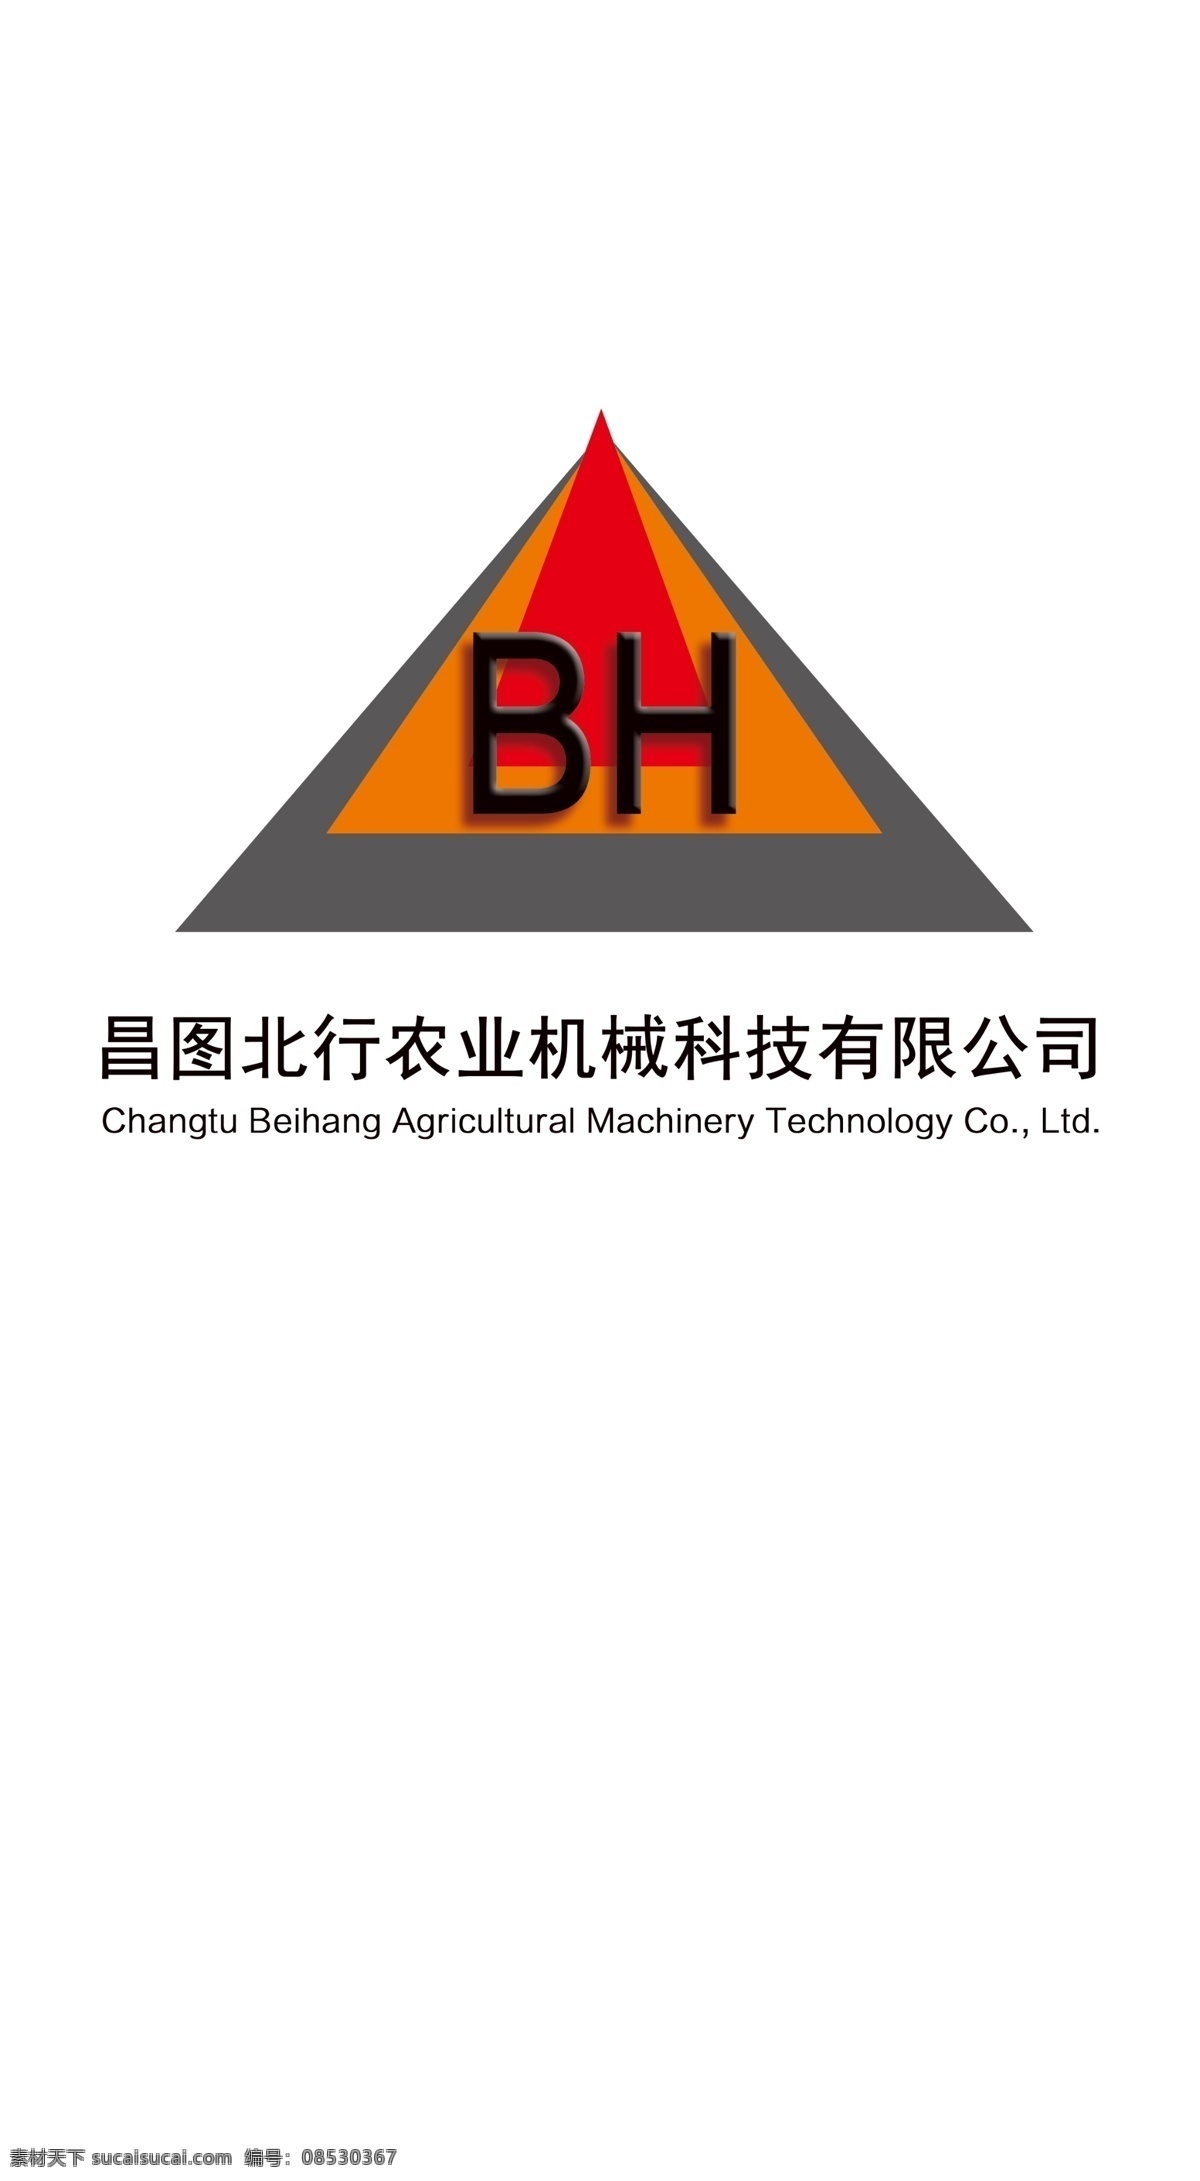 bh 昌图 北行 农业机械 有限公司 bh昌图 北行农业 机械 标志 logo logo设计